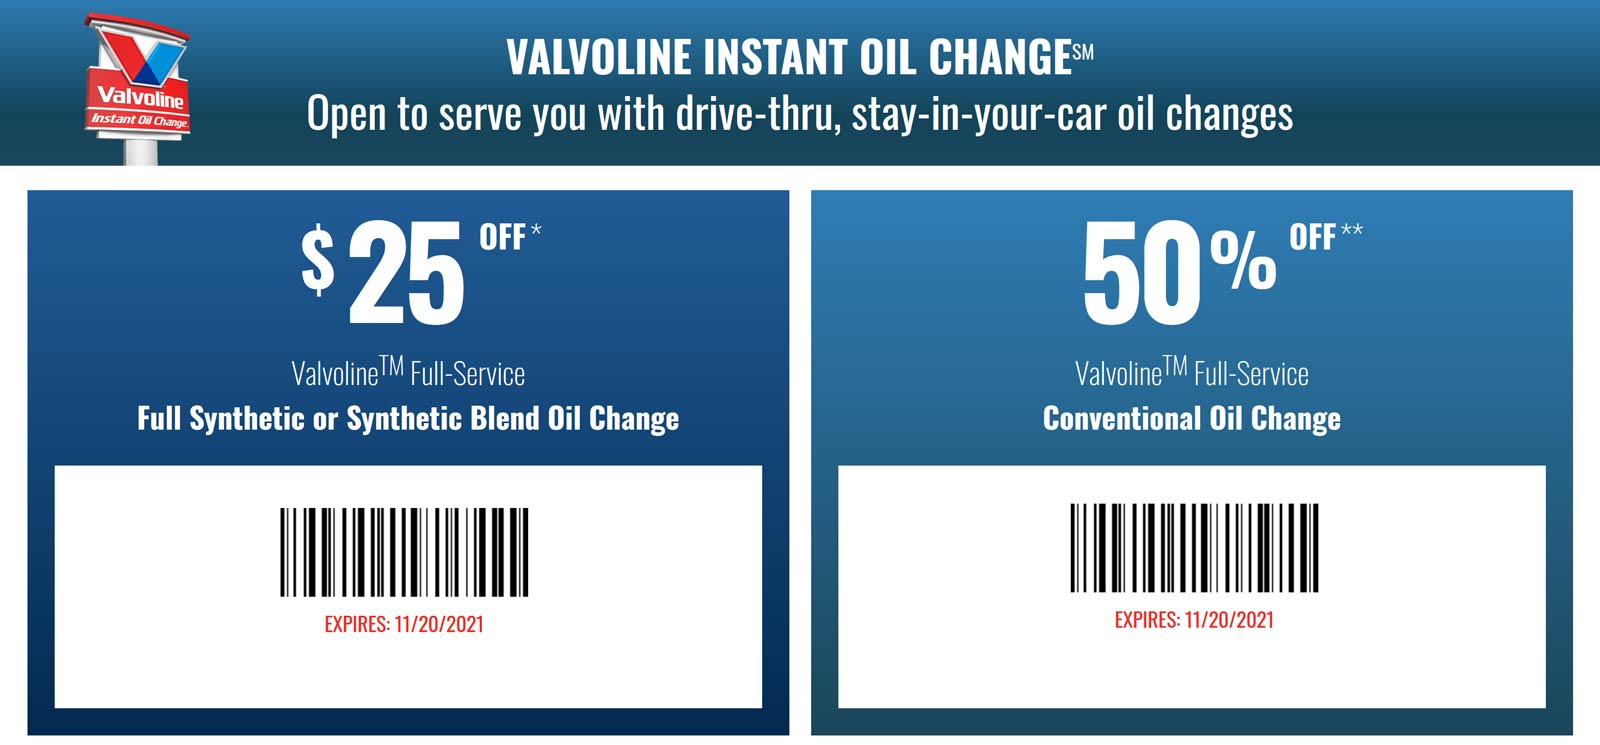 Valvoline Instant Oil Change Coupons, Promo Codes & Deals 2021 - wide 10